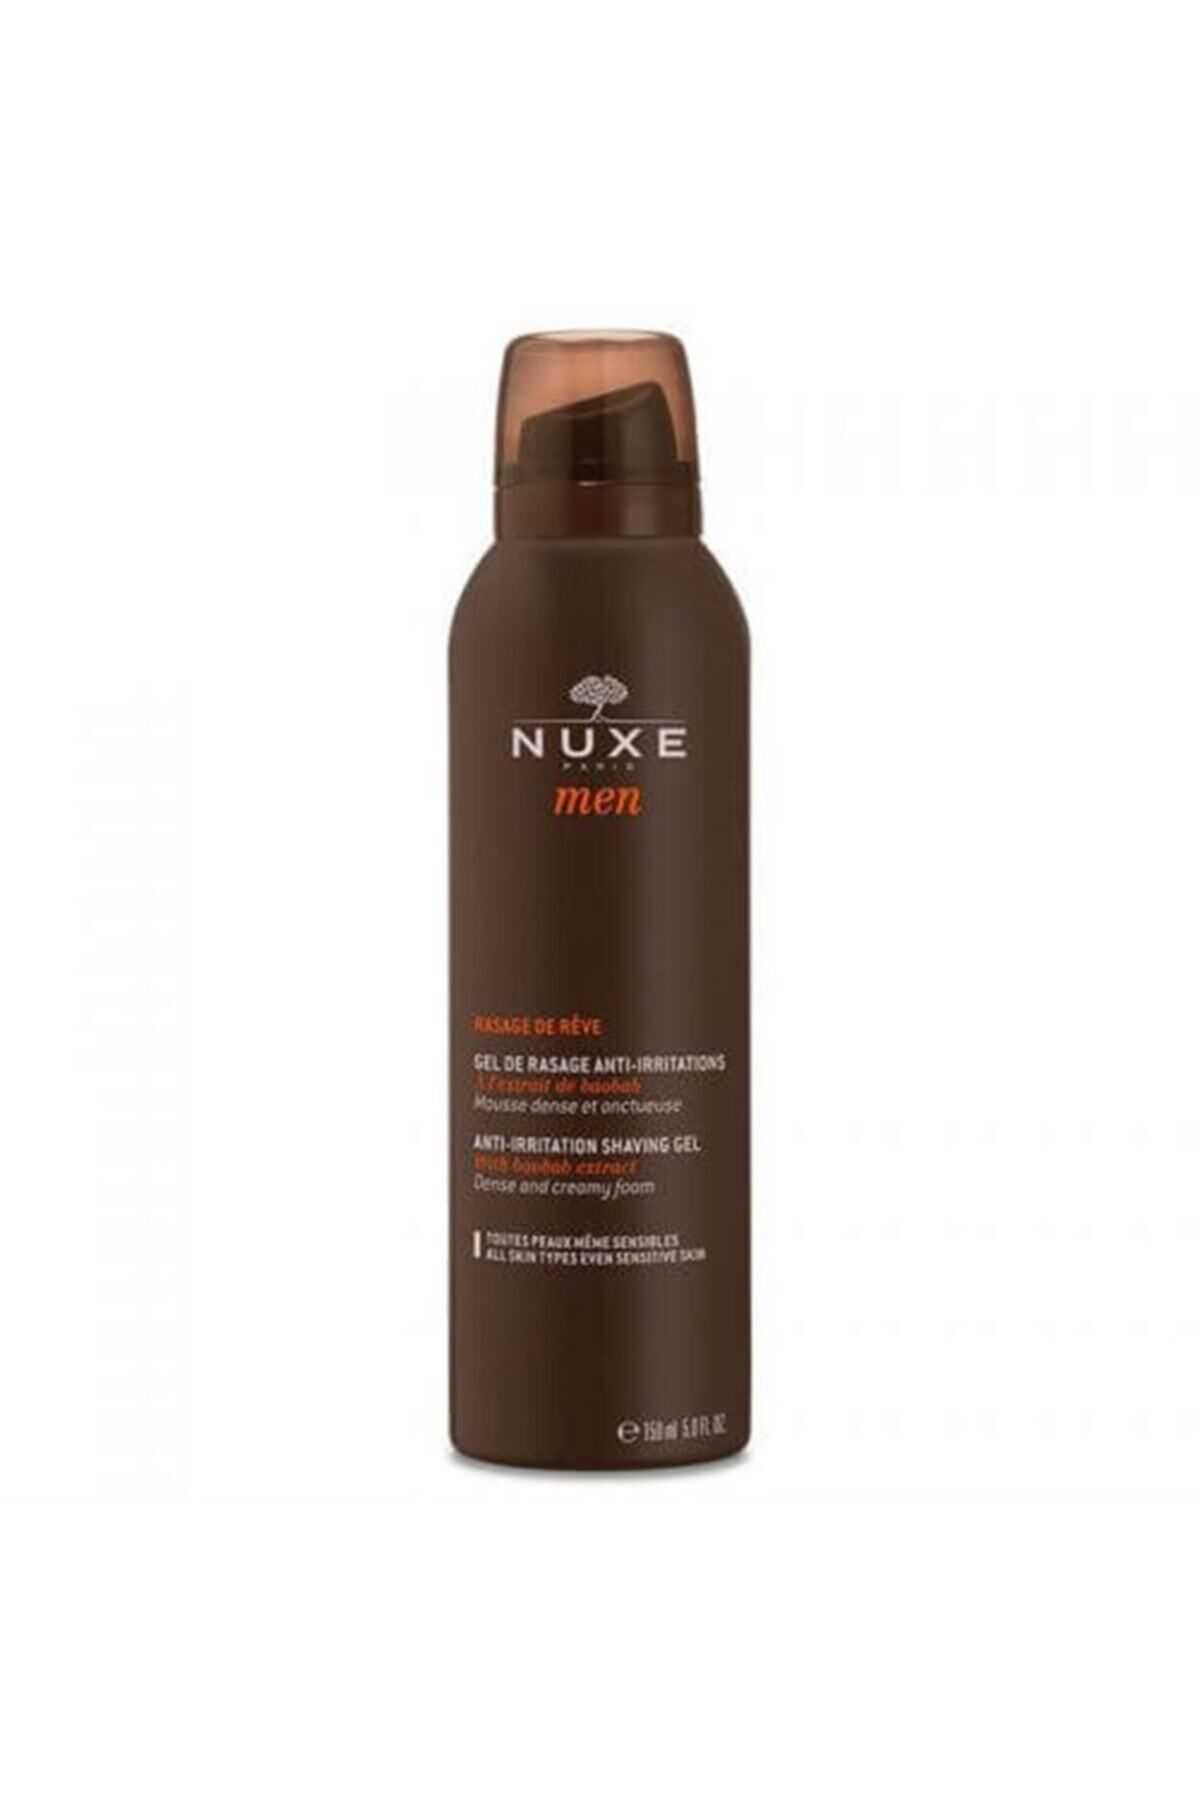 Nuxe ژل اصلاح مردانه 150 میلی لیتر برای پوست حساس ضد تحریک هیسکوزمتیک